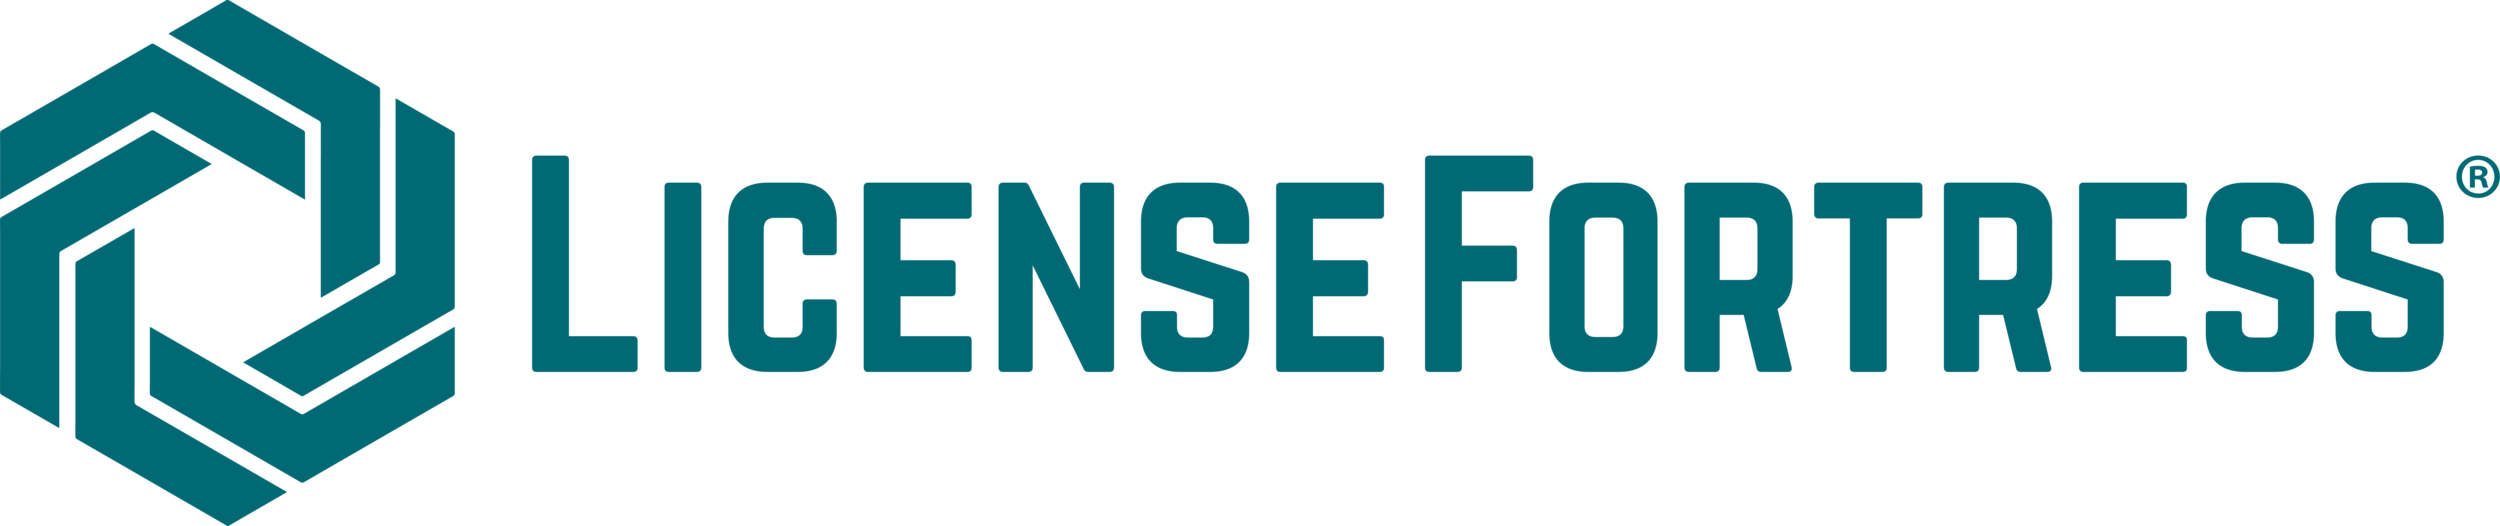 licensefortress transparent logo